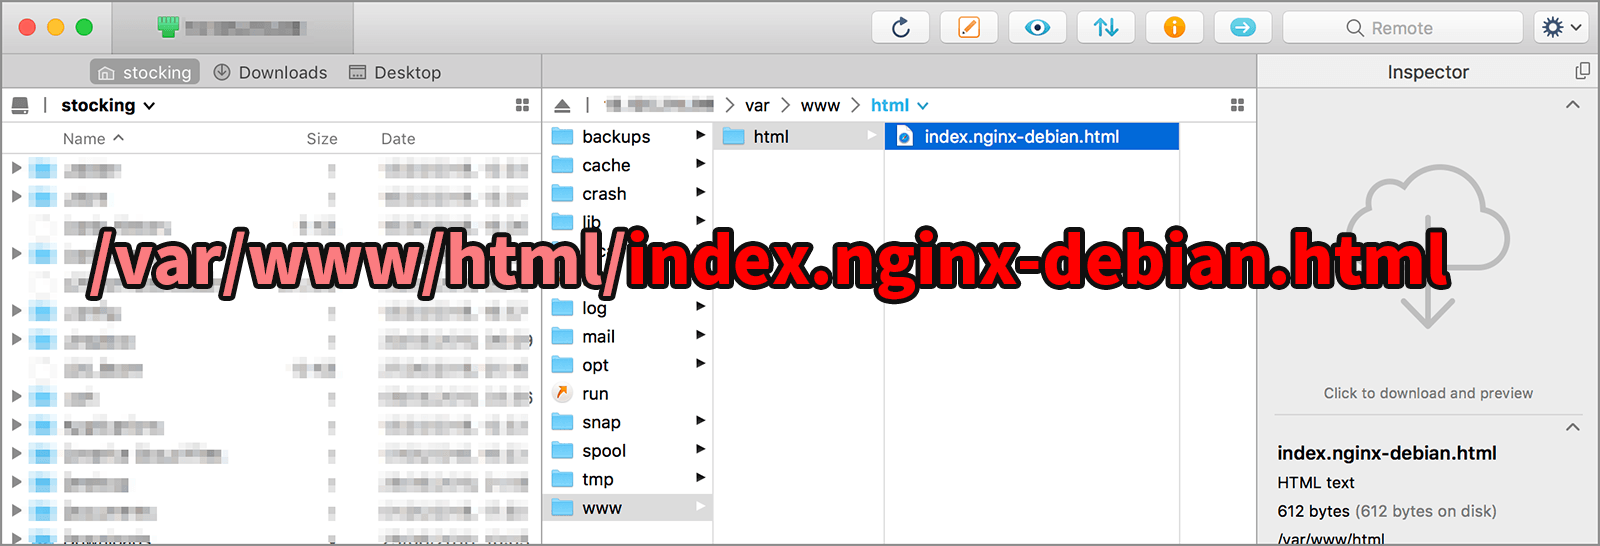 index.nginx-debian.html 파일의 위치